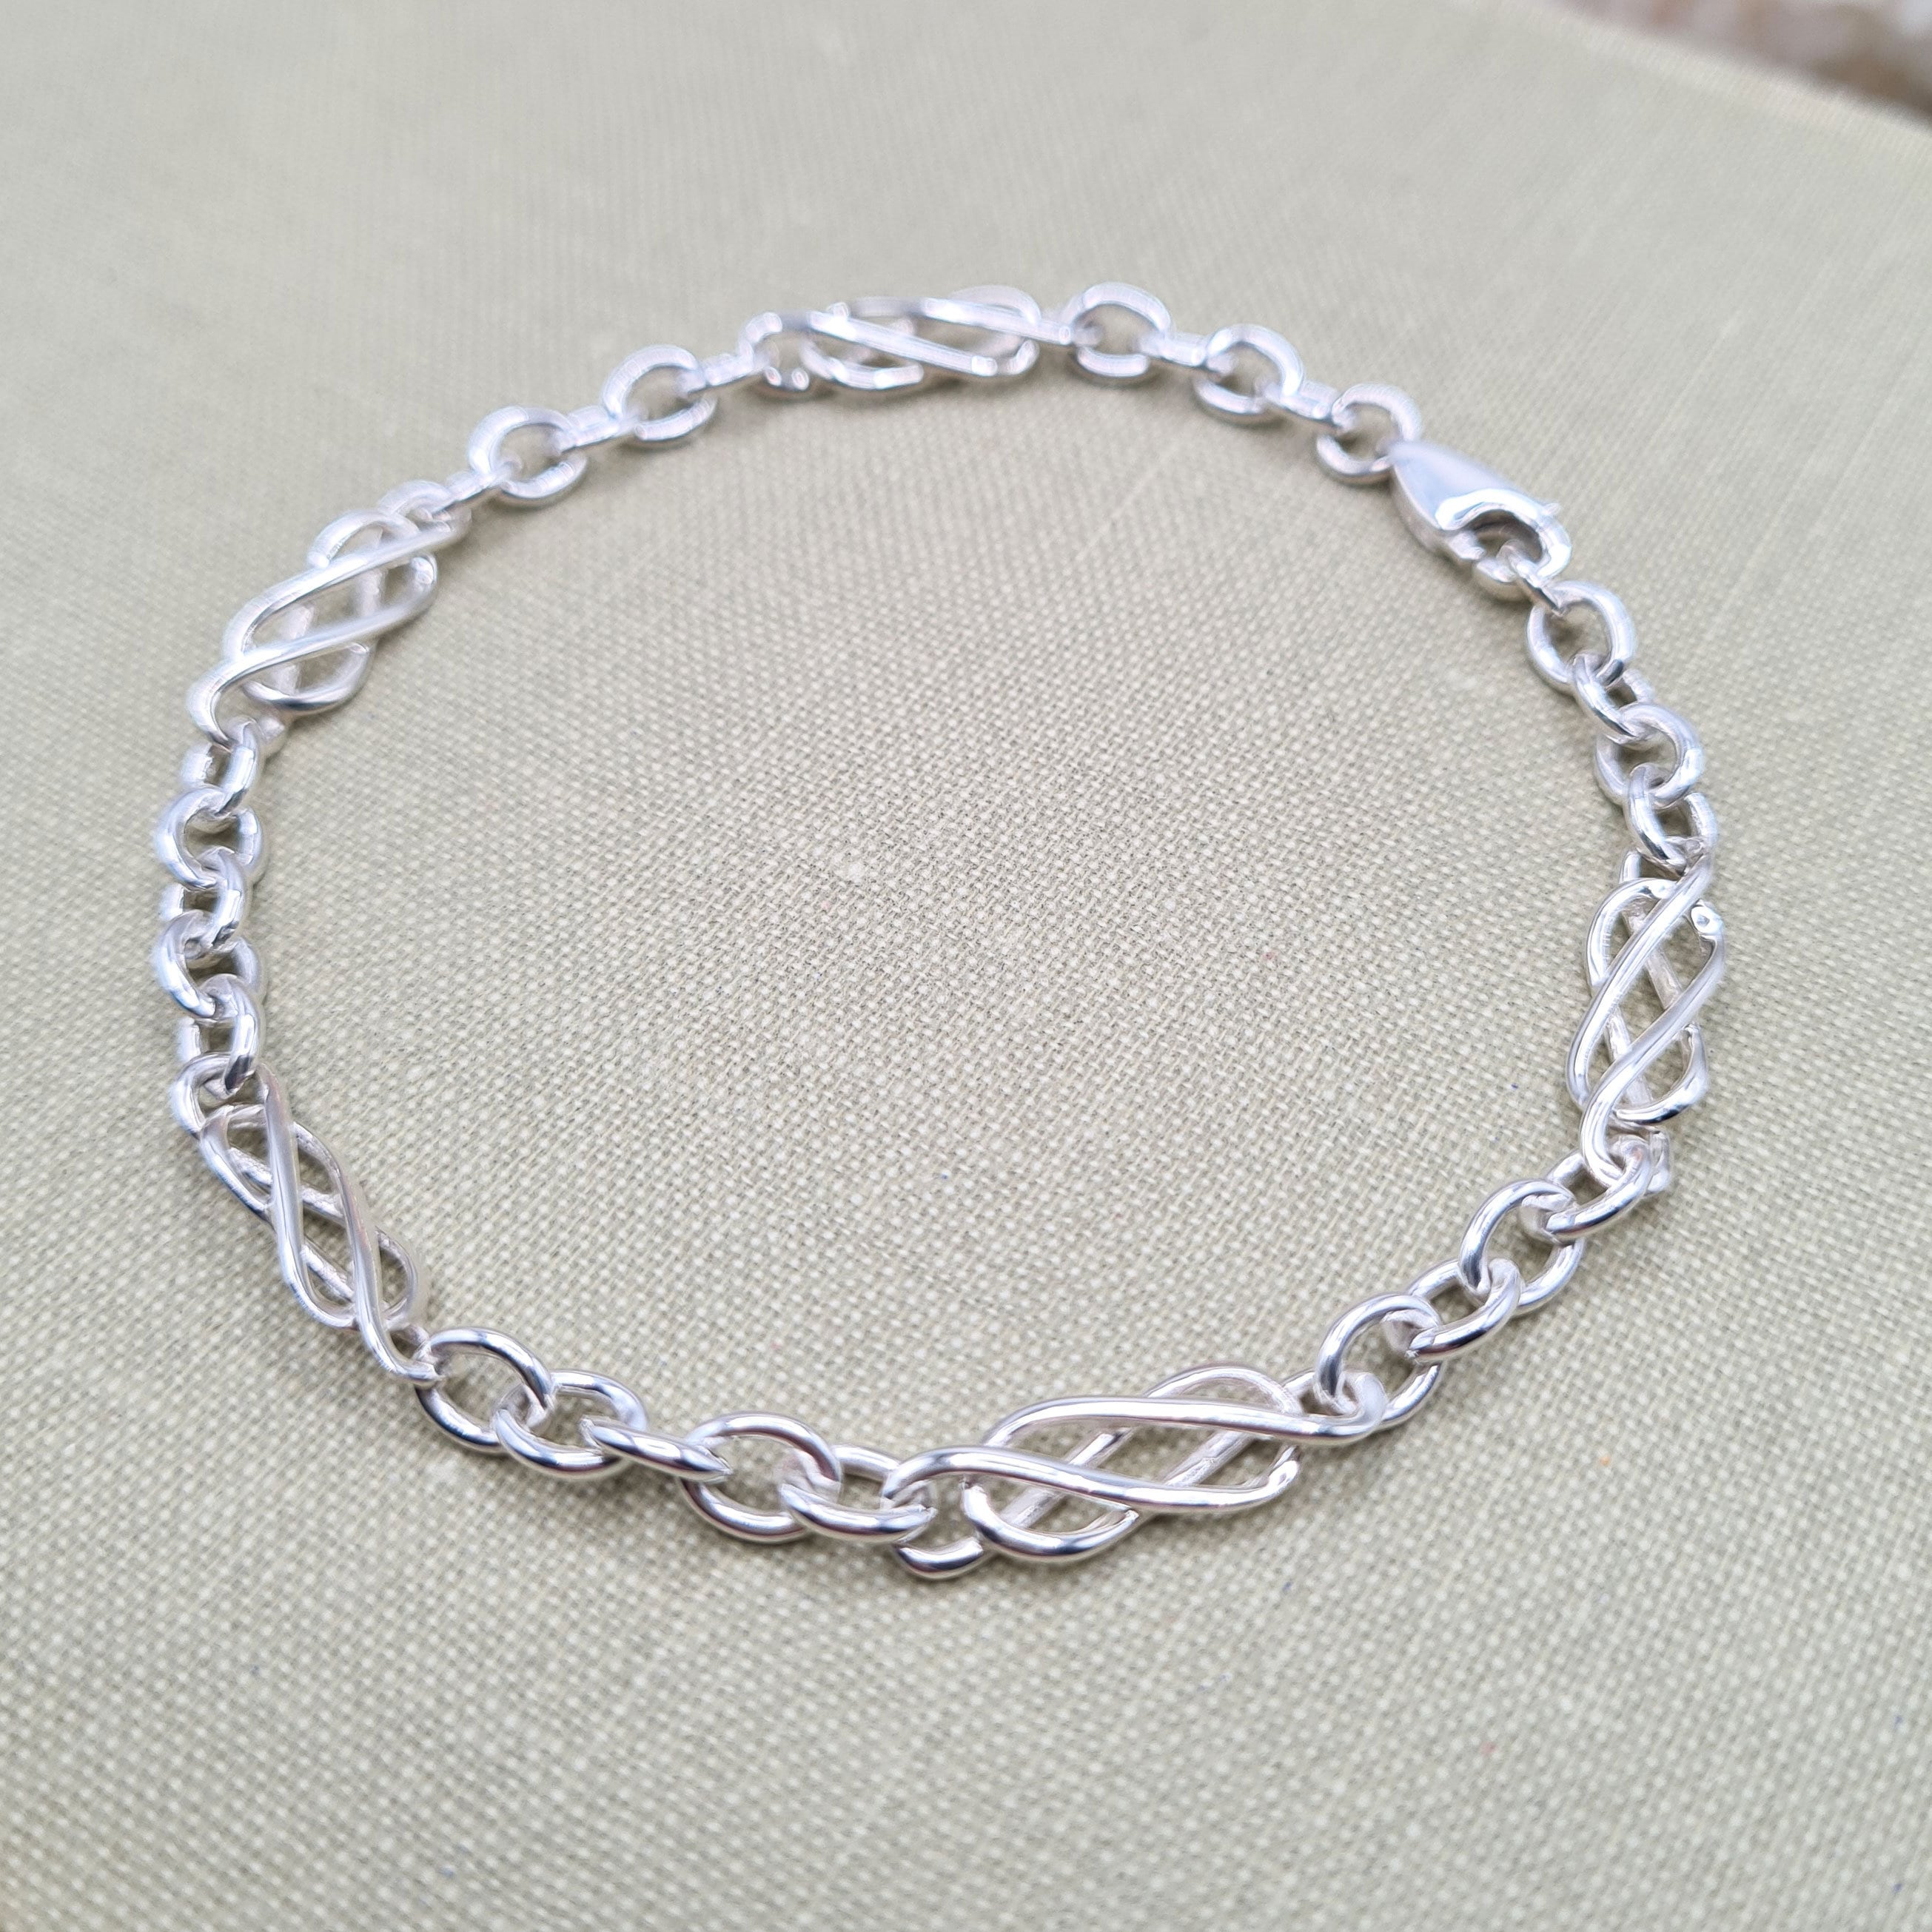 Silver Bracelets Designs starting @ Rs. 468 -Shaya by CaratLane